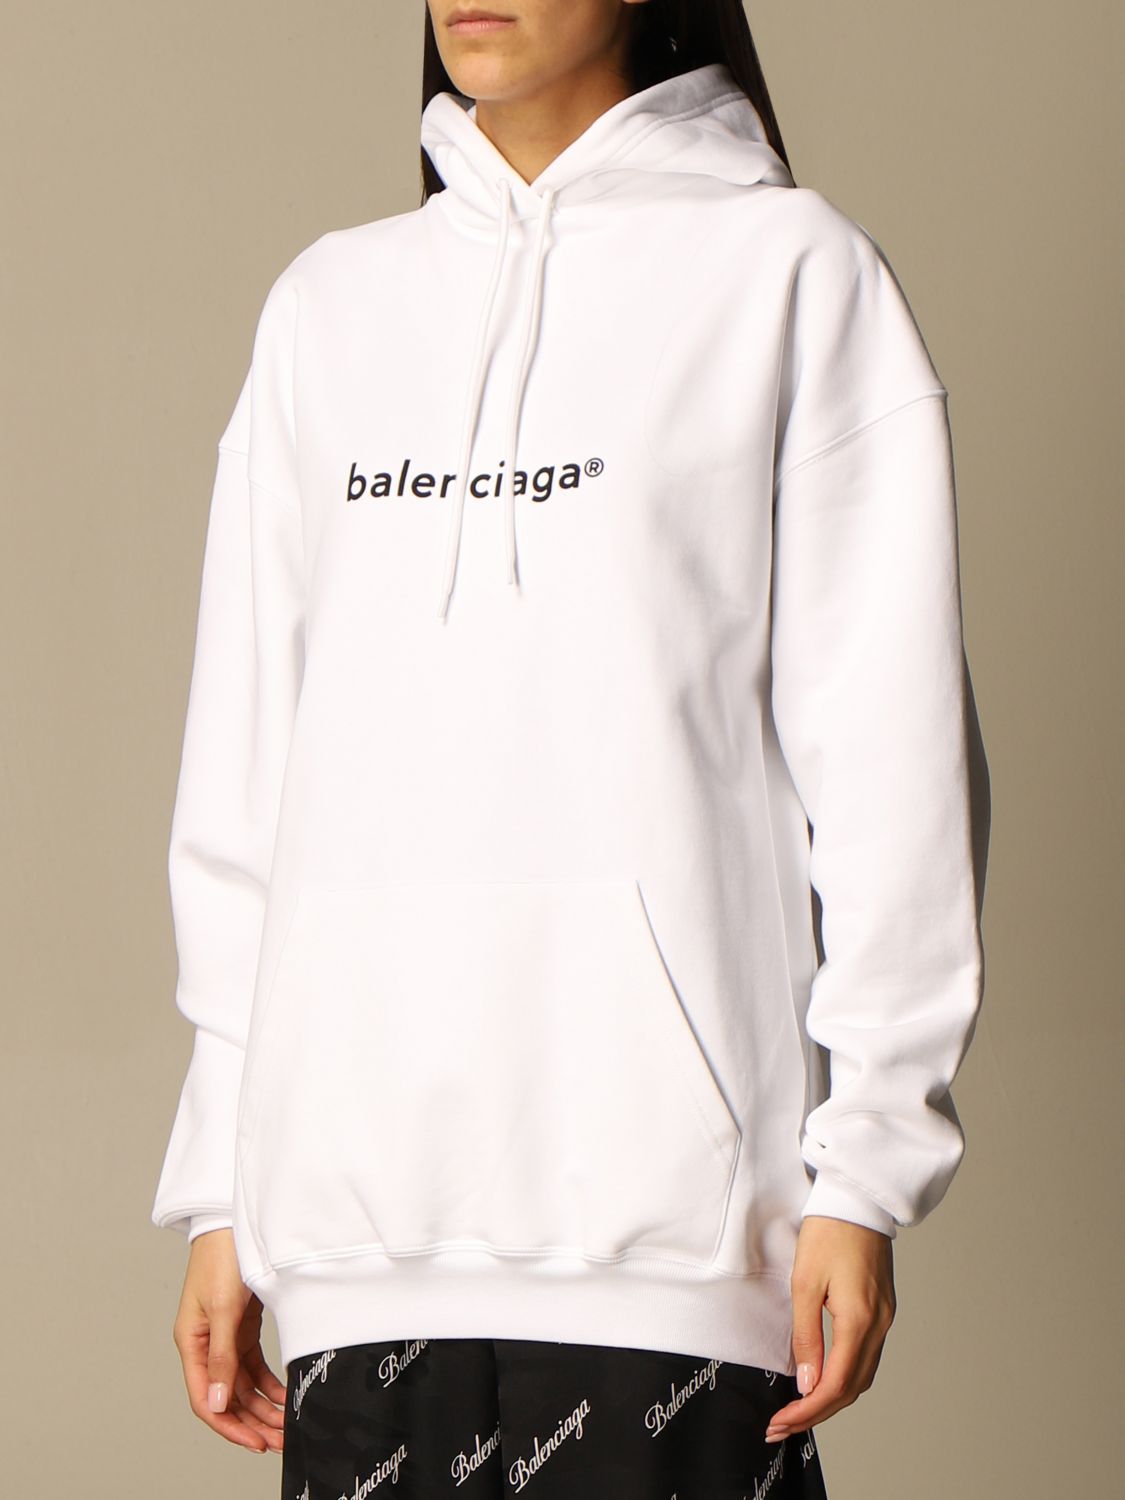 What Makes Taylor Swifts 895 Balenciaga Sweatshirt So Controversial   Vanity Fair